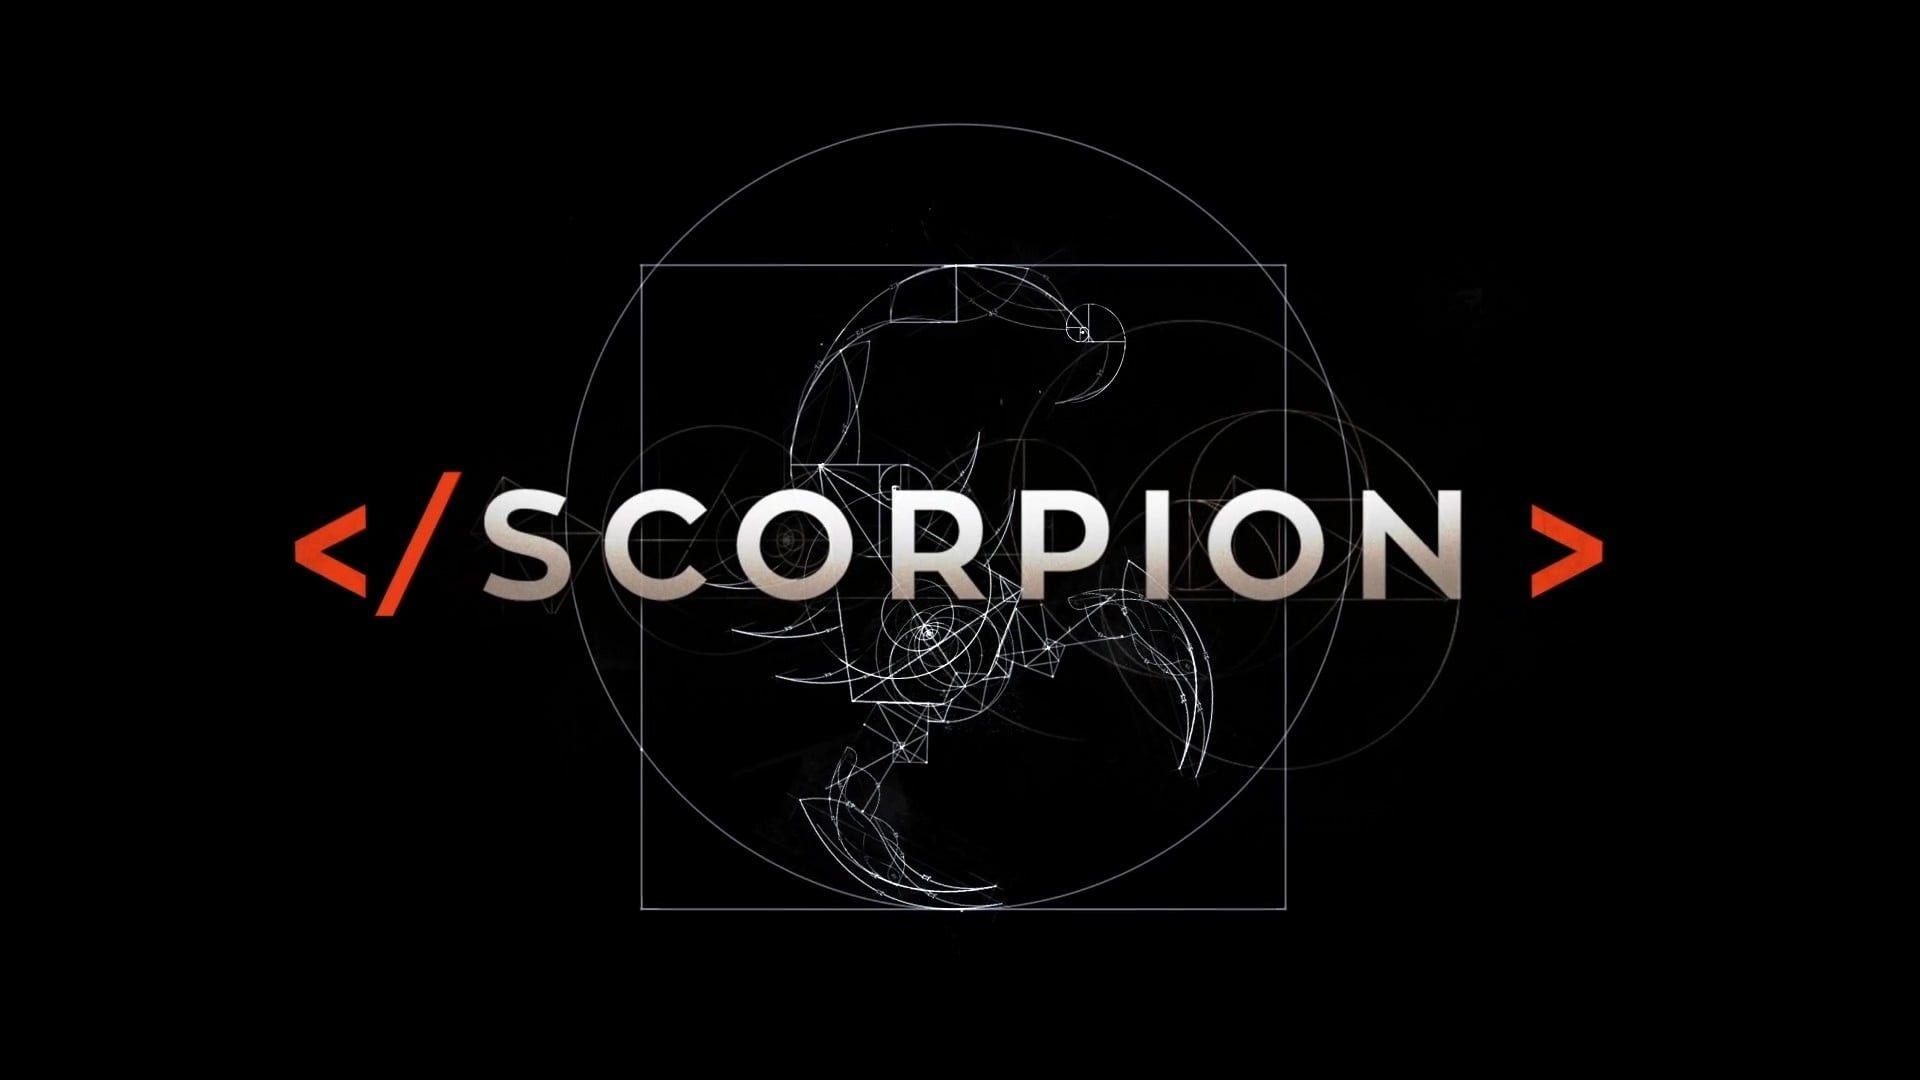 Black Scorpion Wallpapers - Top Free Black Scorpion Backgrounds